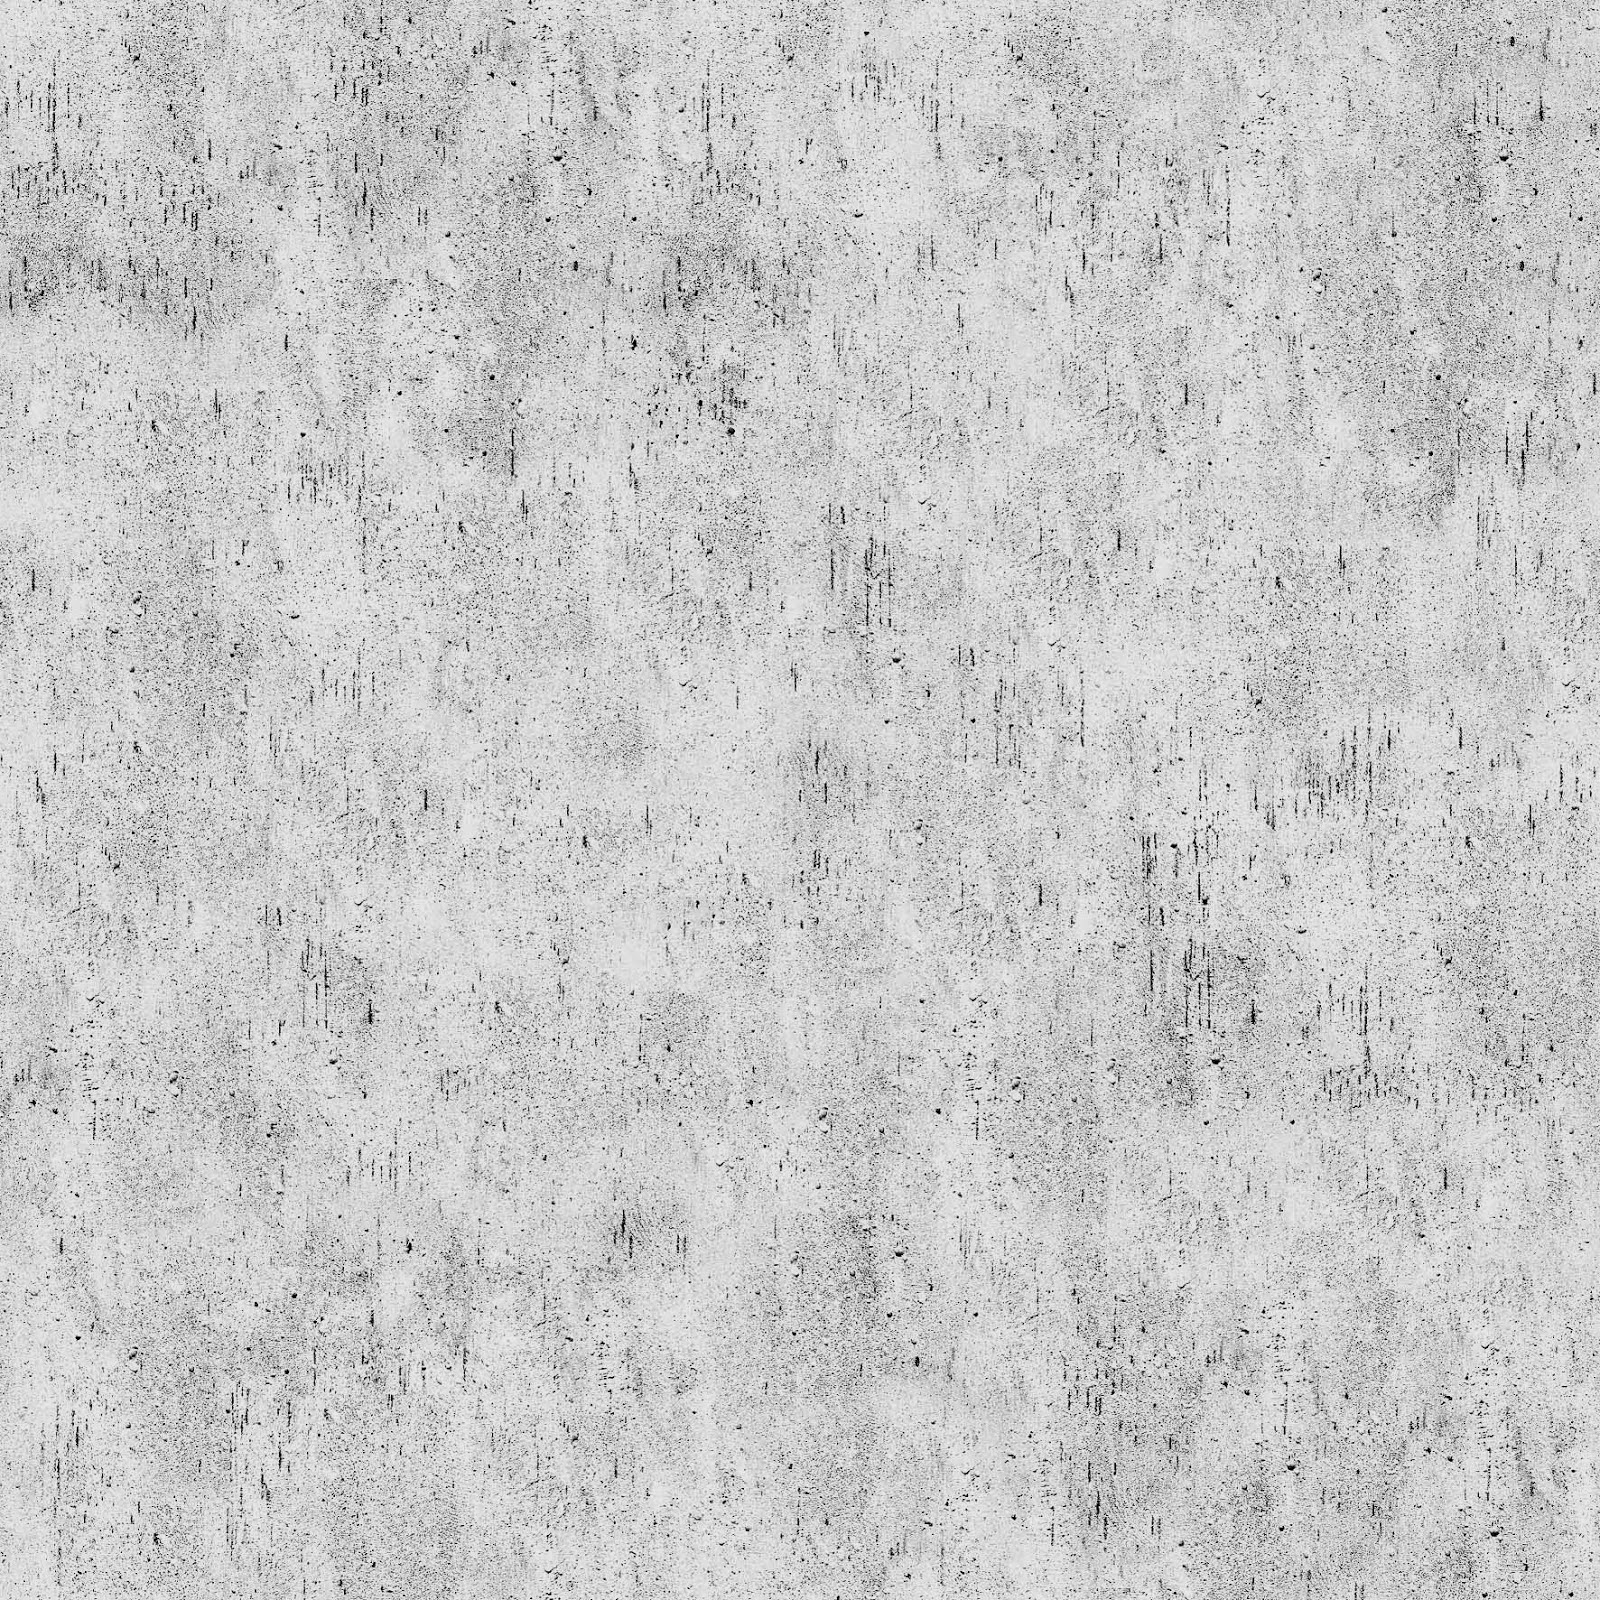 Texture free: Texture concrete